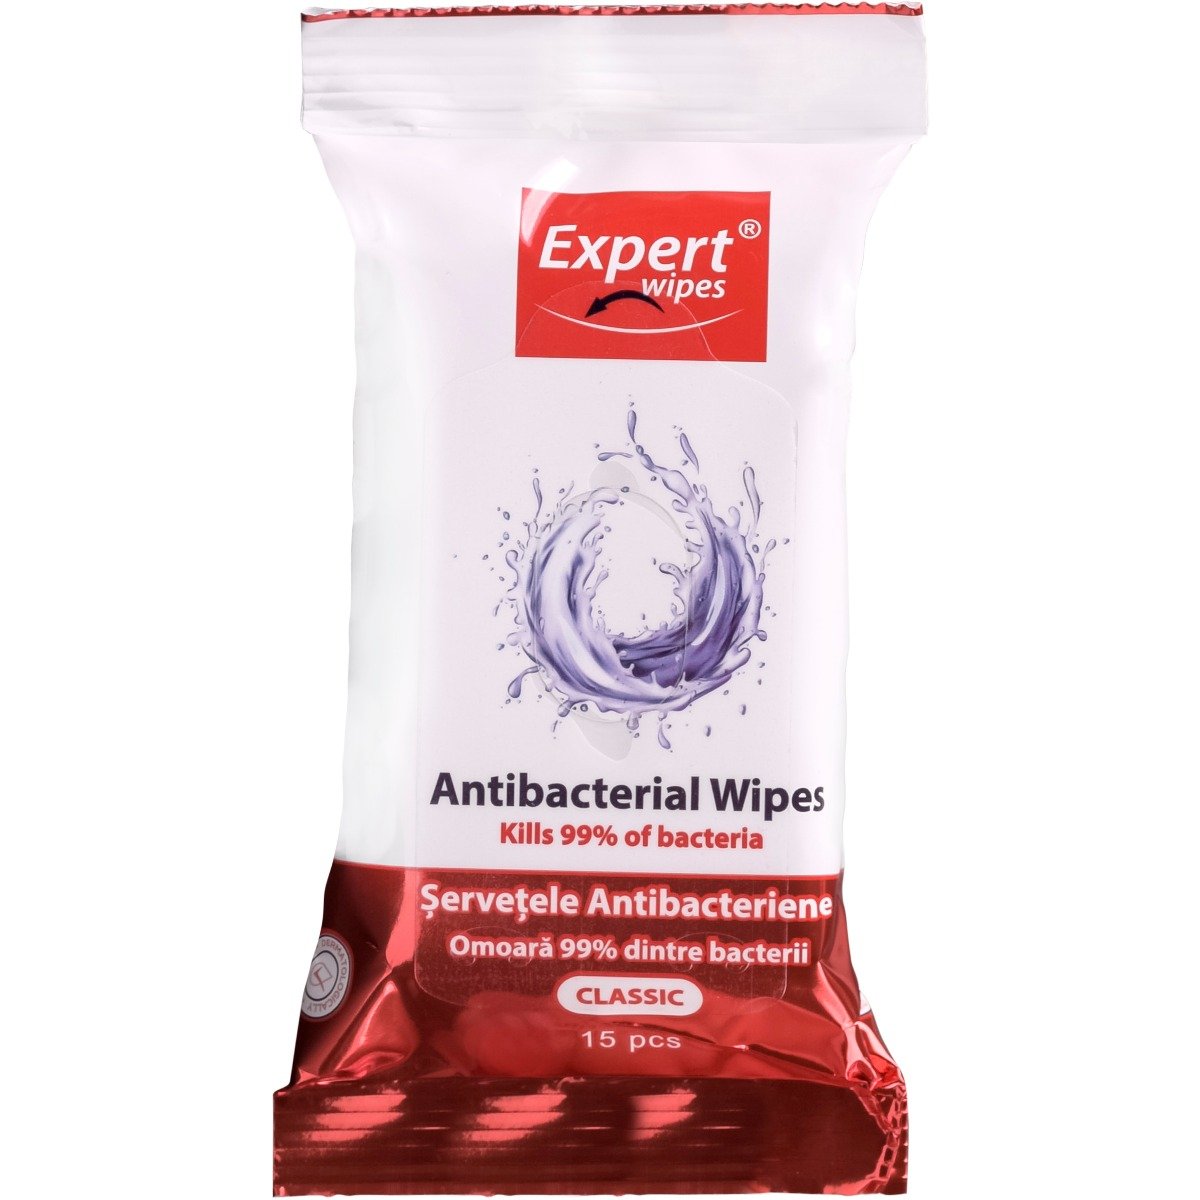 Servetele antibacteriene Expert Wipes Clasic, 15 buc imagine